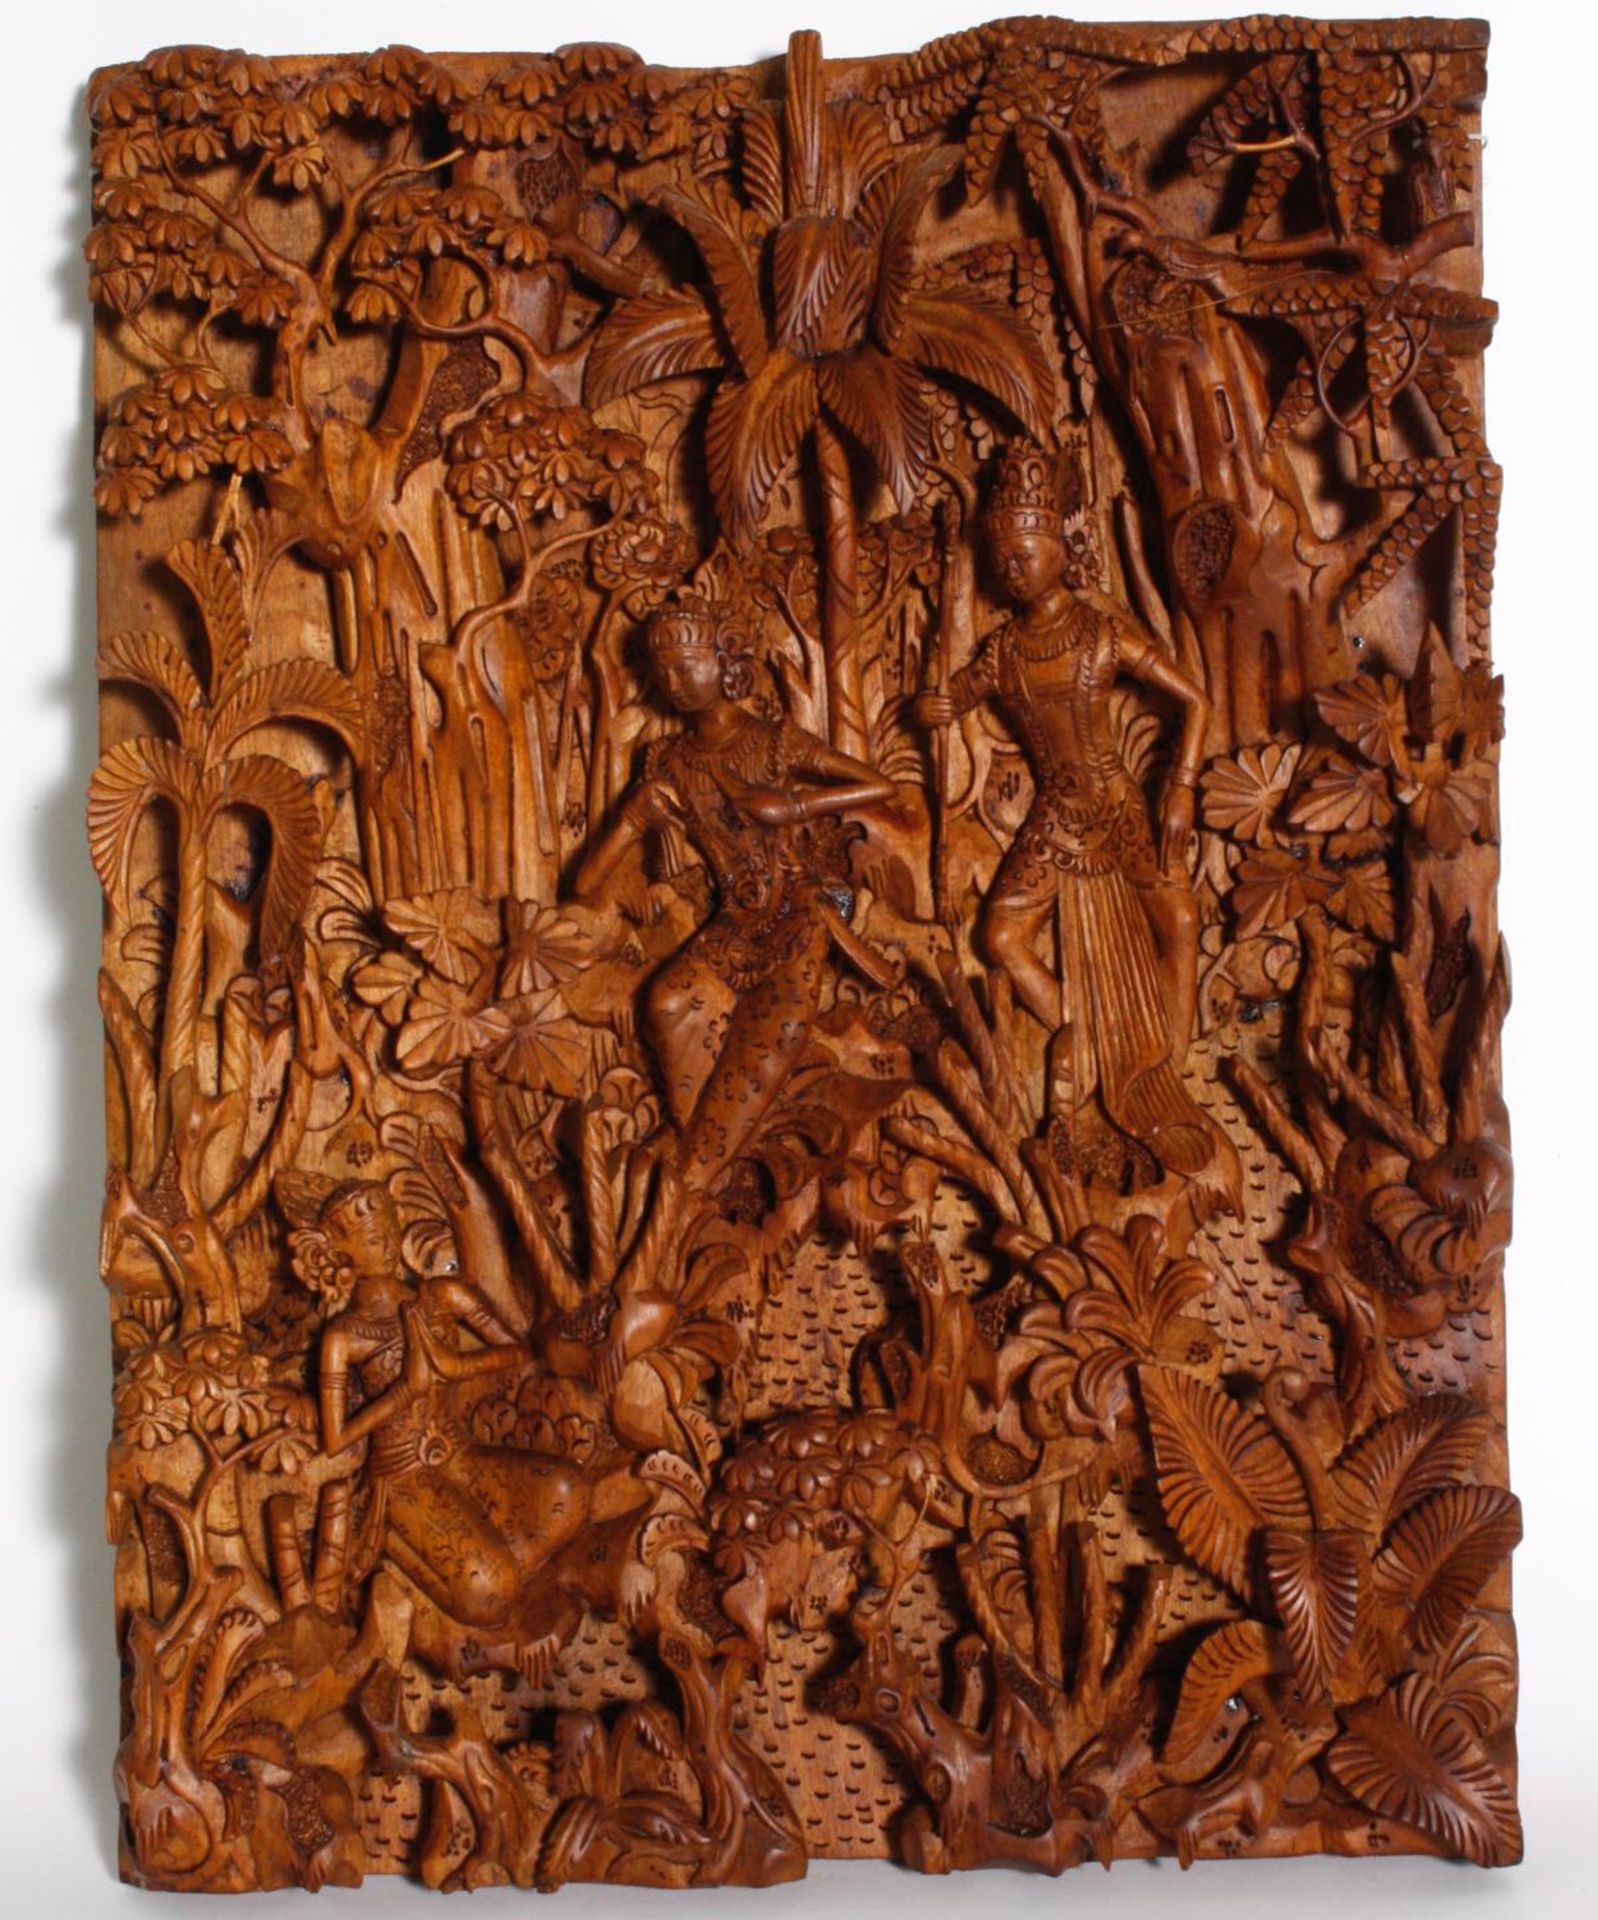 Holz Relief, Indonesien, 2. Hälfte 20. Jahrhundert